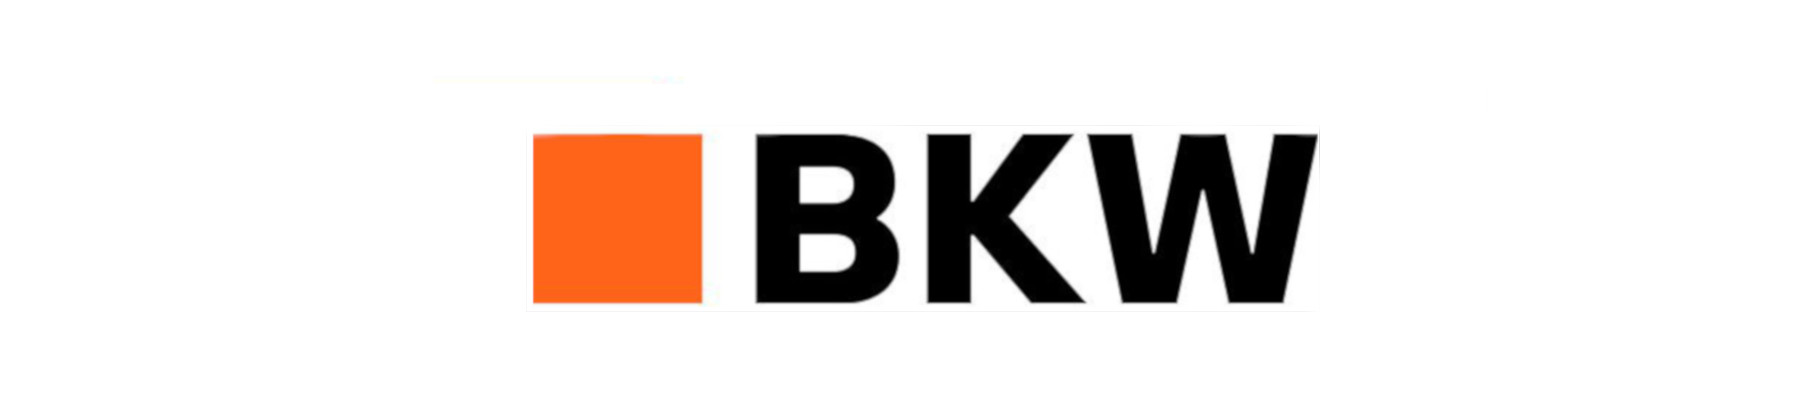 bkw2